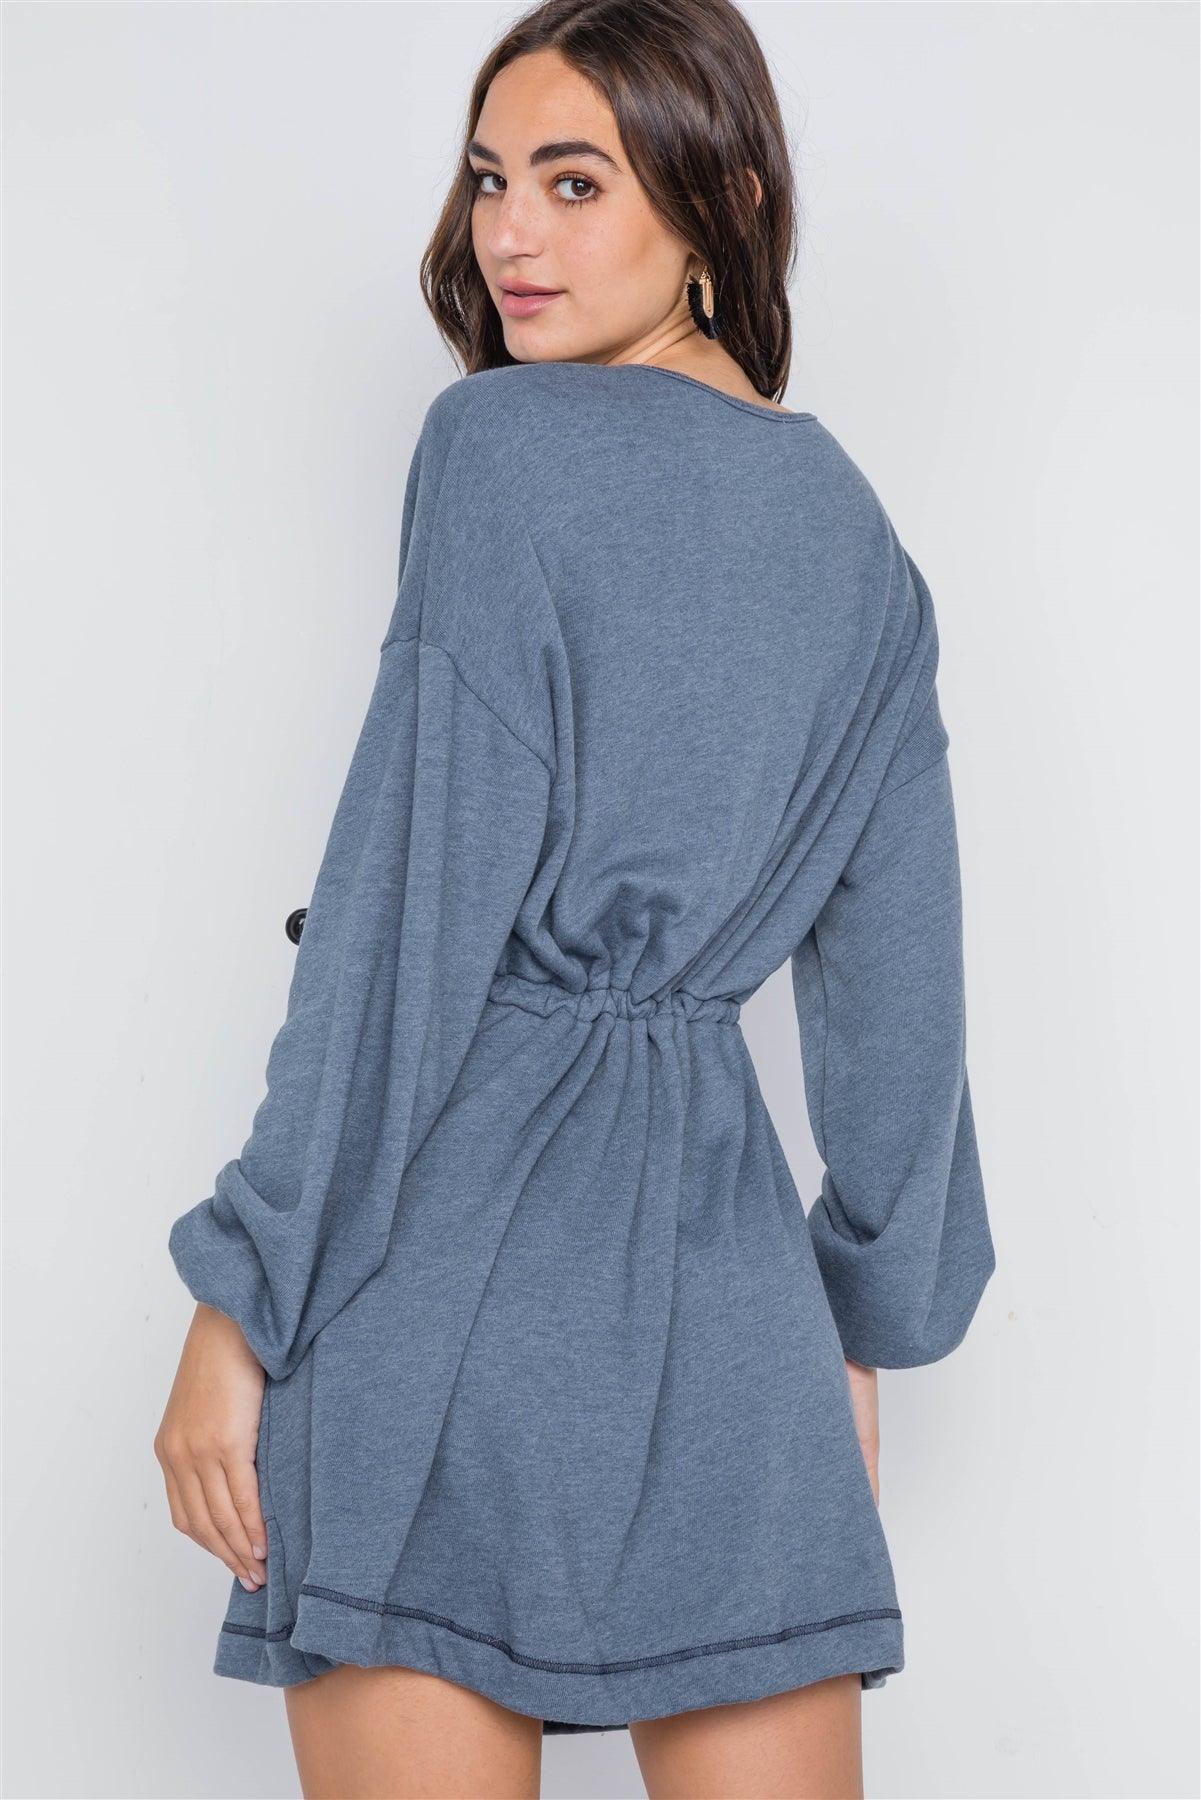 Denim Blue Knit Long Sleeve Sweater Dress /2-2-2